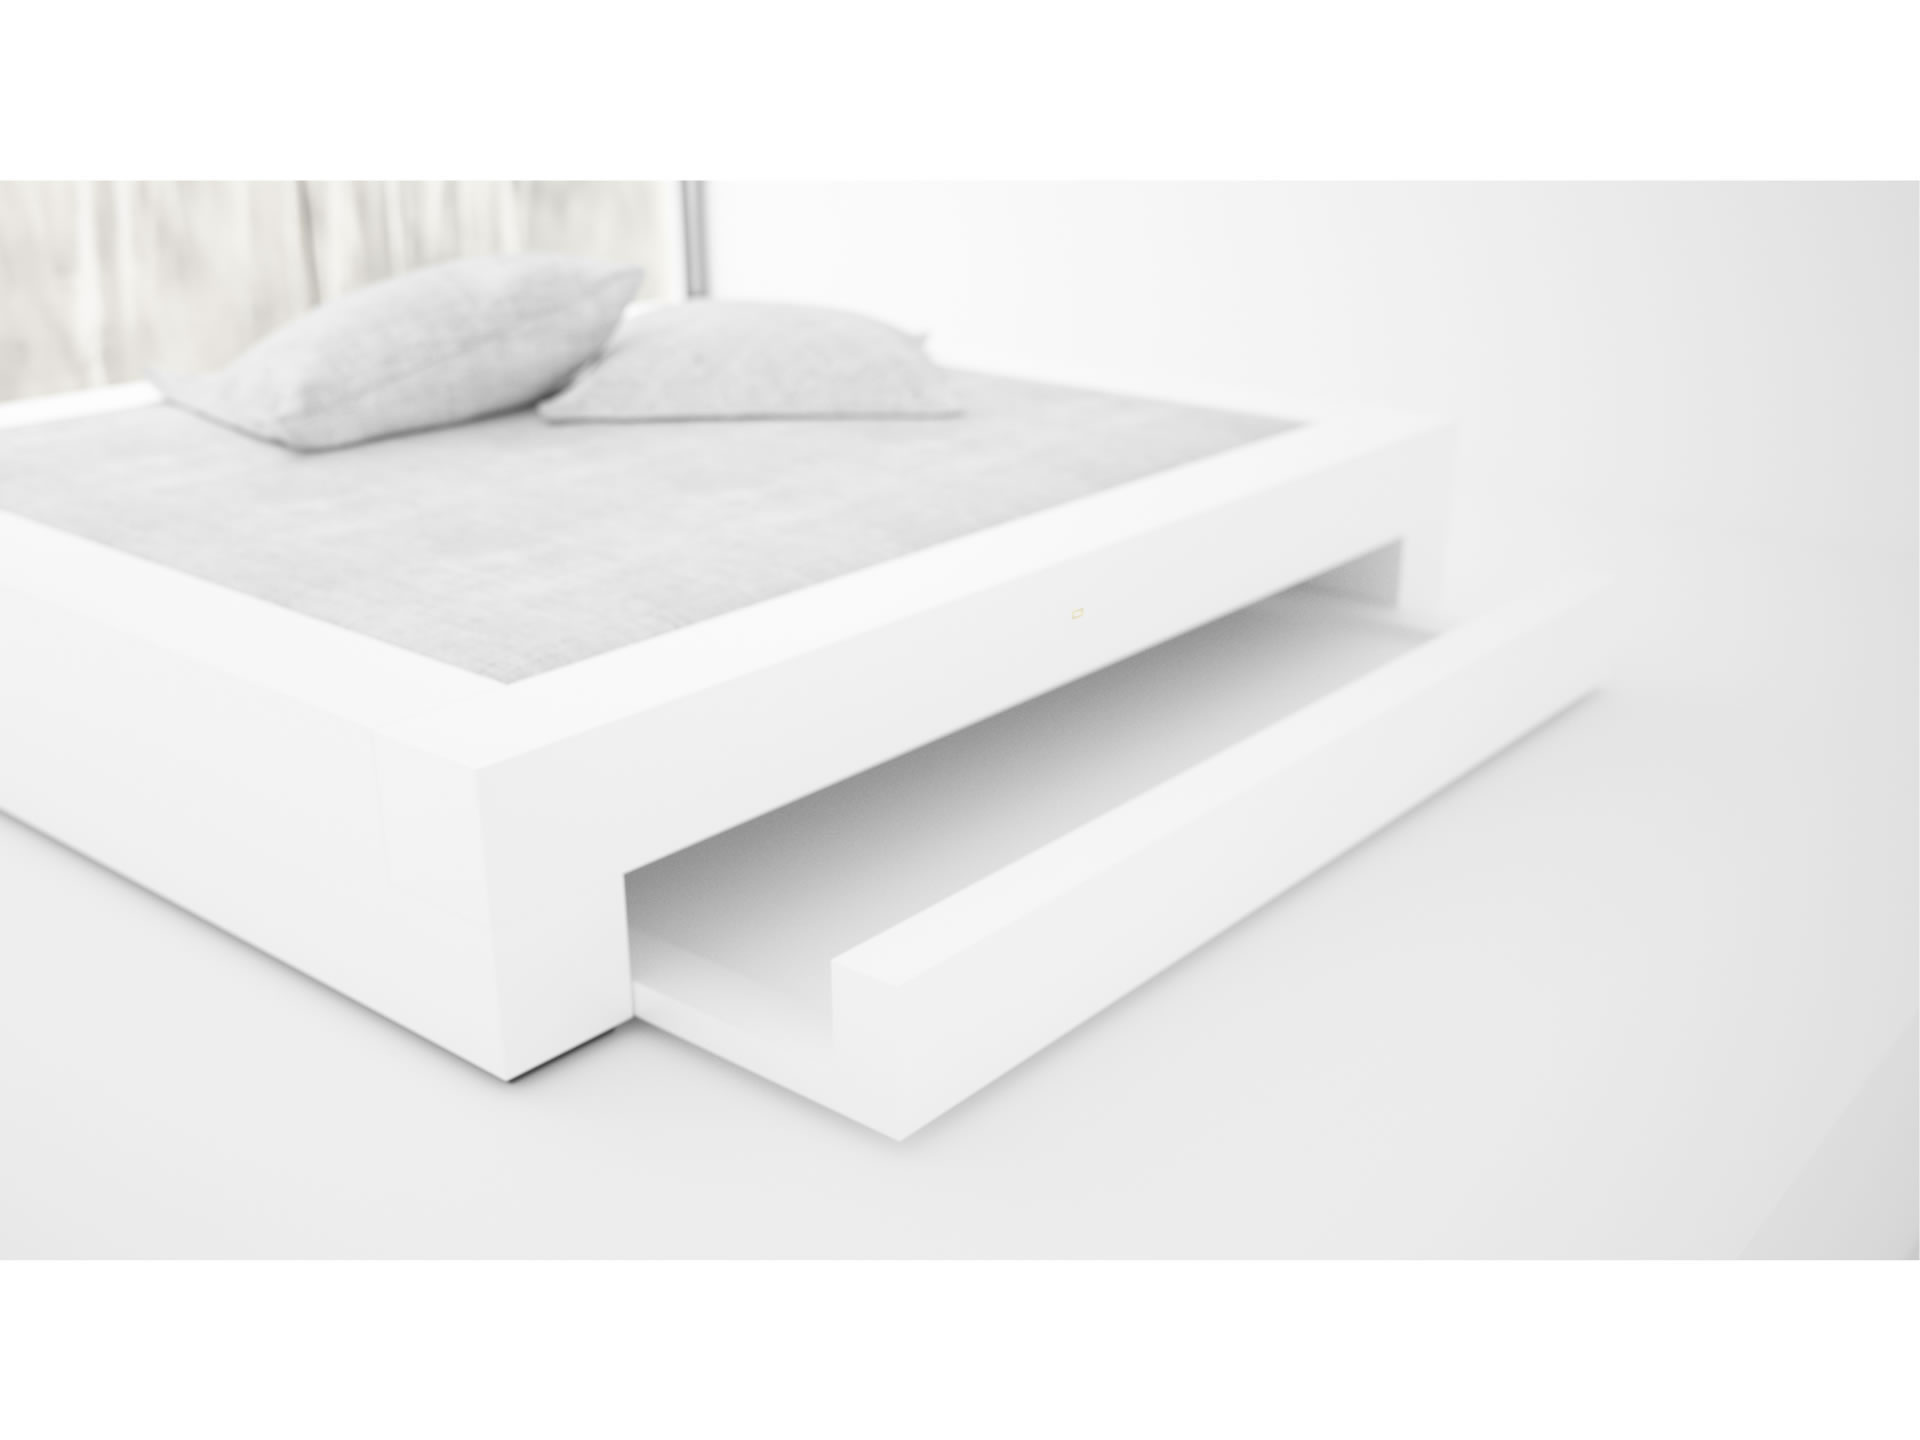 FELIX SCHWAKE BED I I Nobel White Bed with Drawers